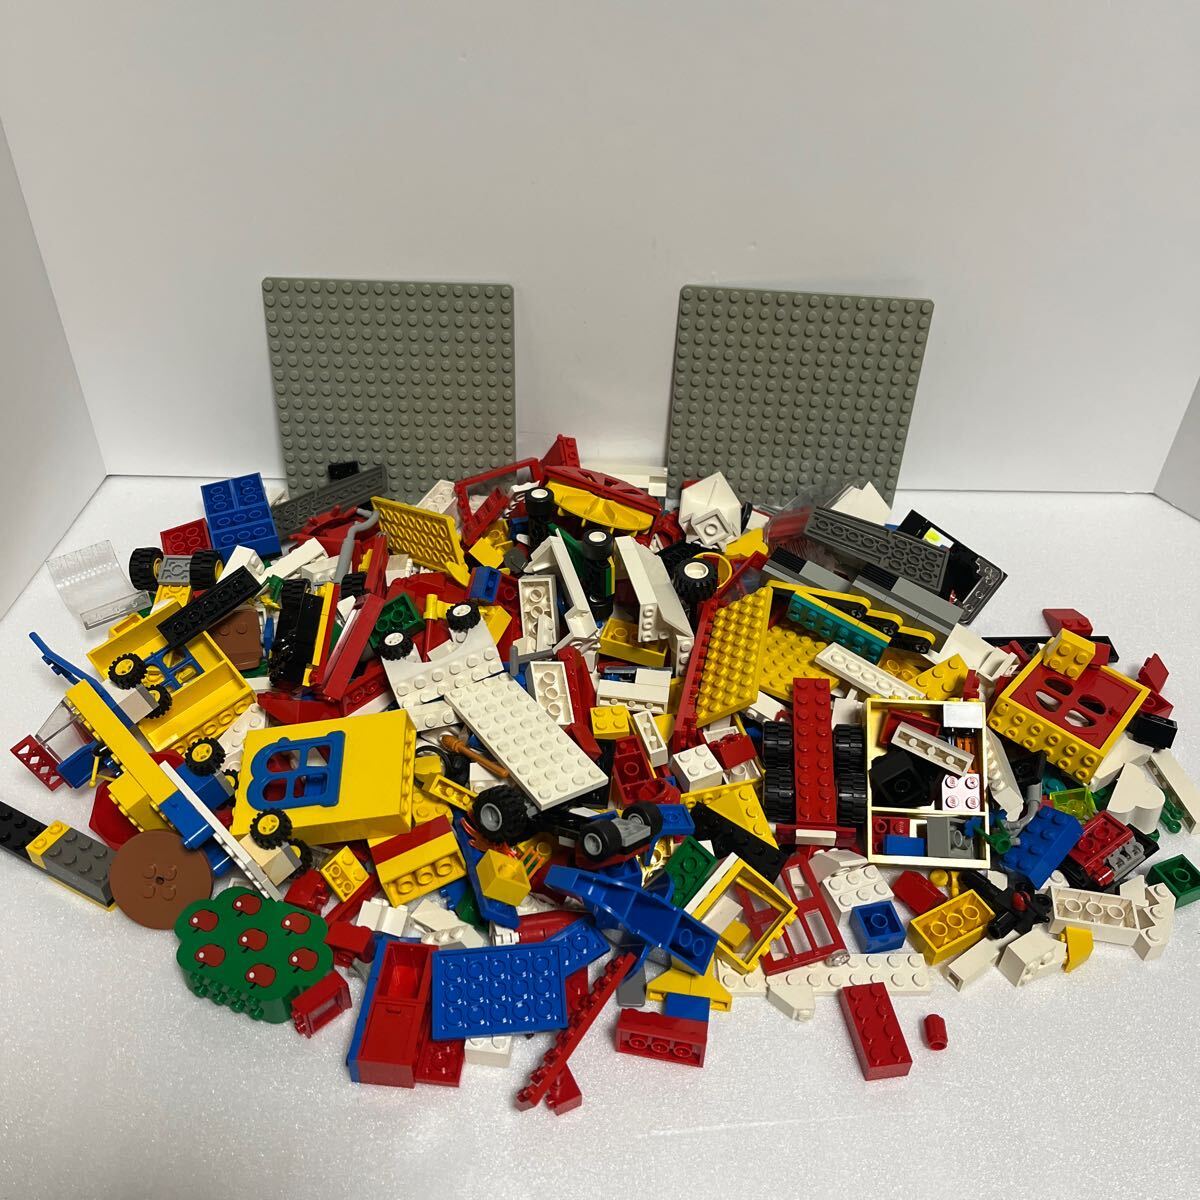 LEGO パーツいろいろ まとめて 大量セット レゴブロック 玩具 おもちゃ _画像1